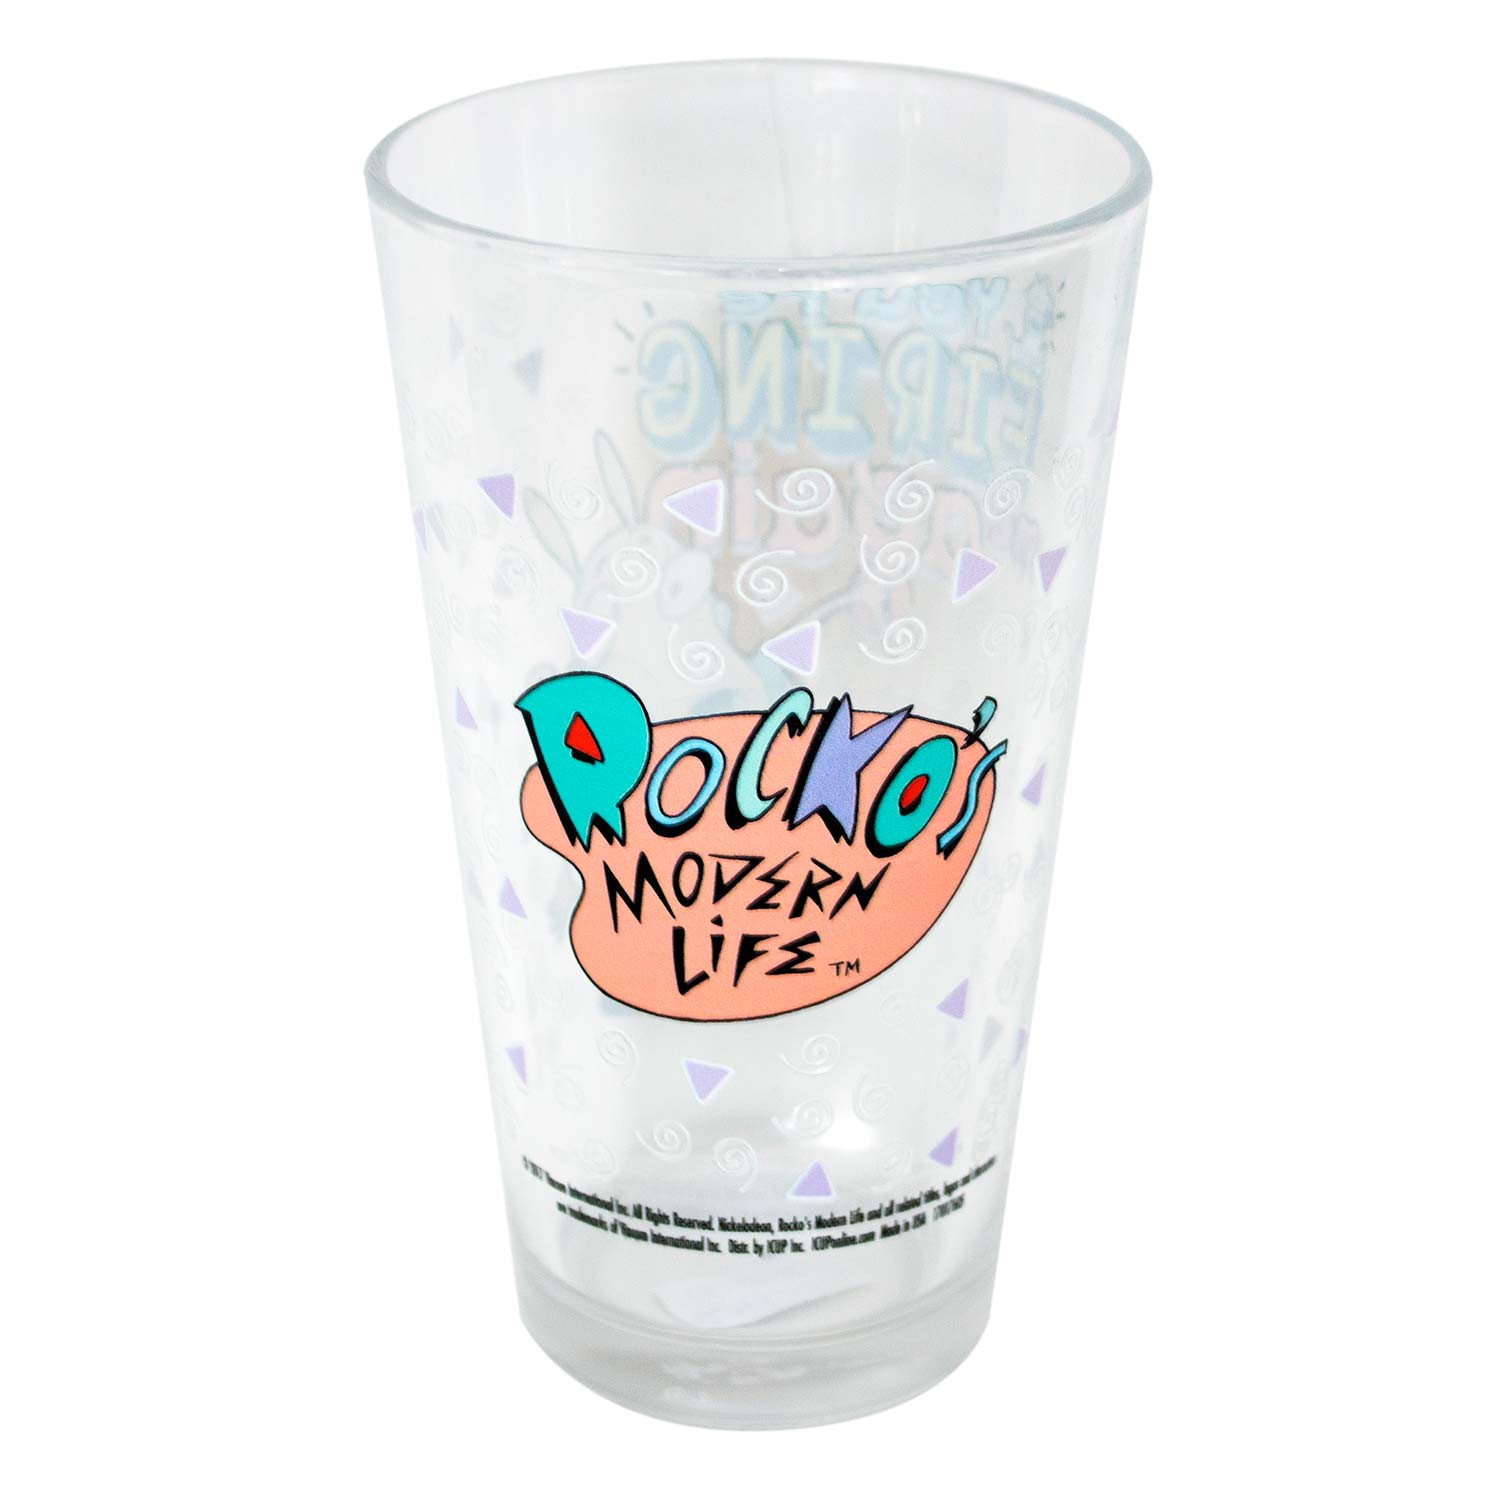 Rocko's Modern Life Pint Glass